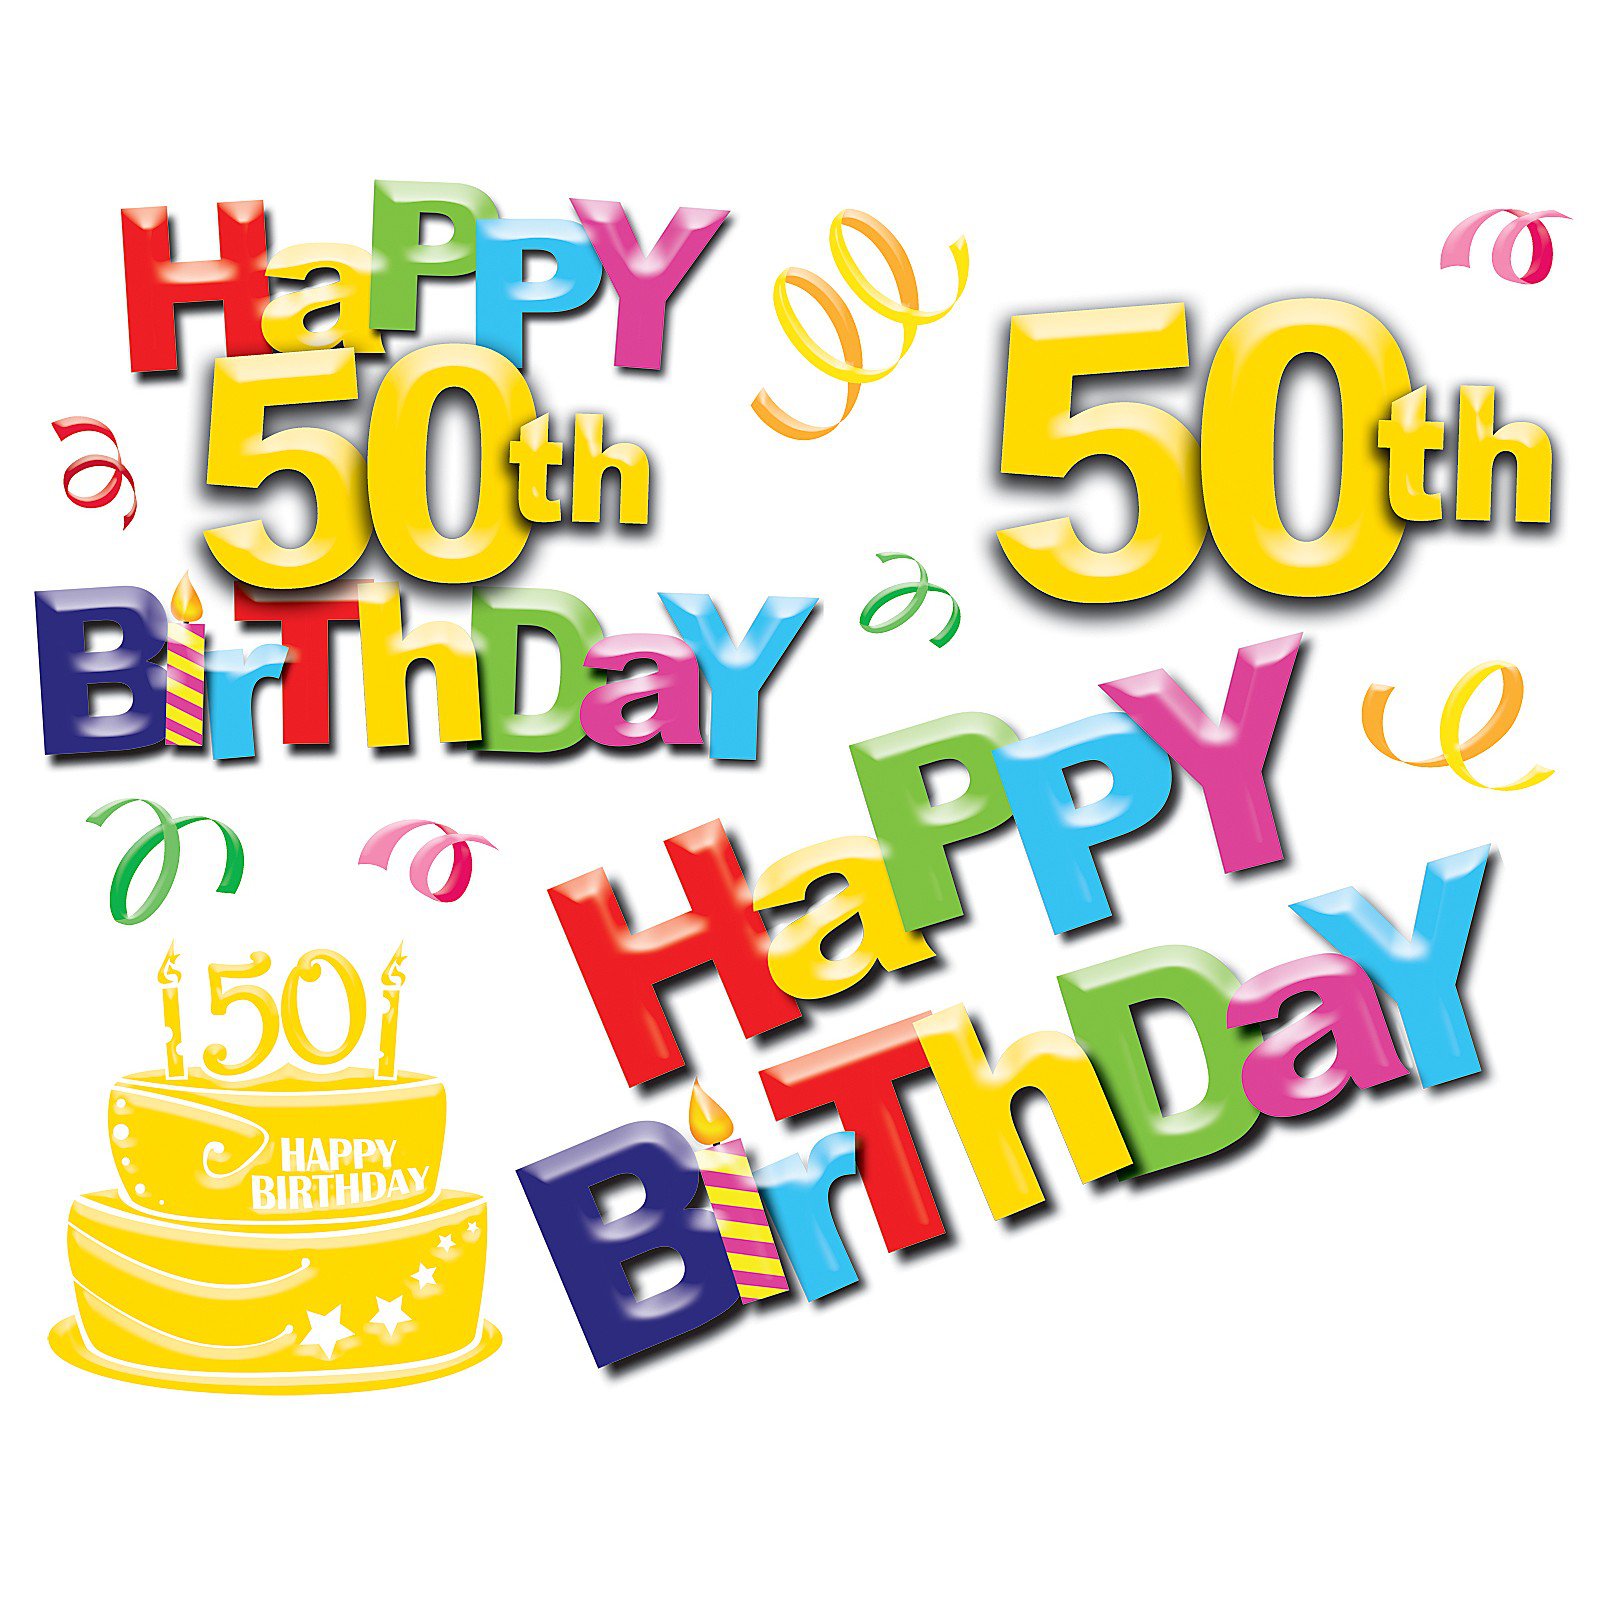 Happy 50th birthday clip art free